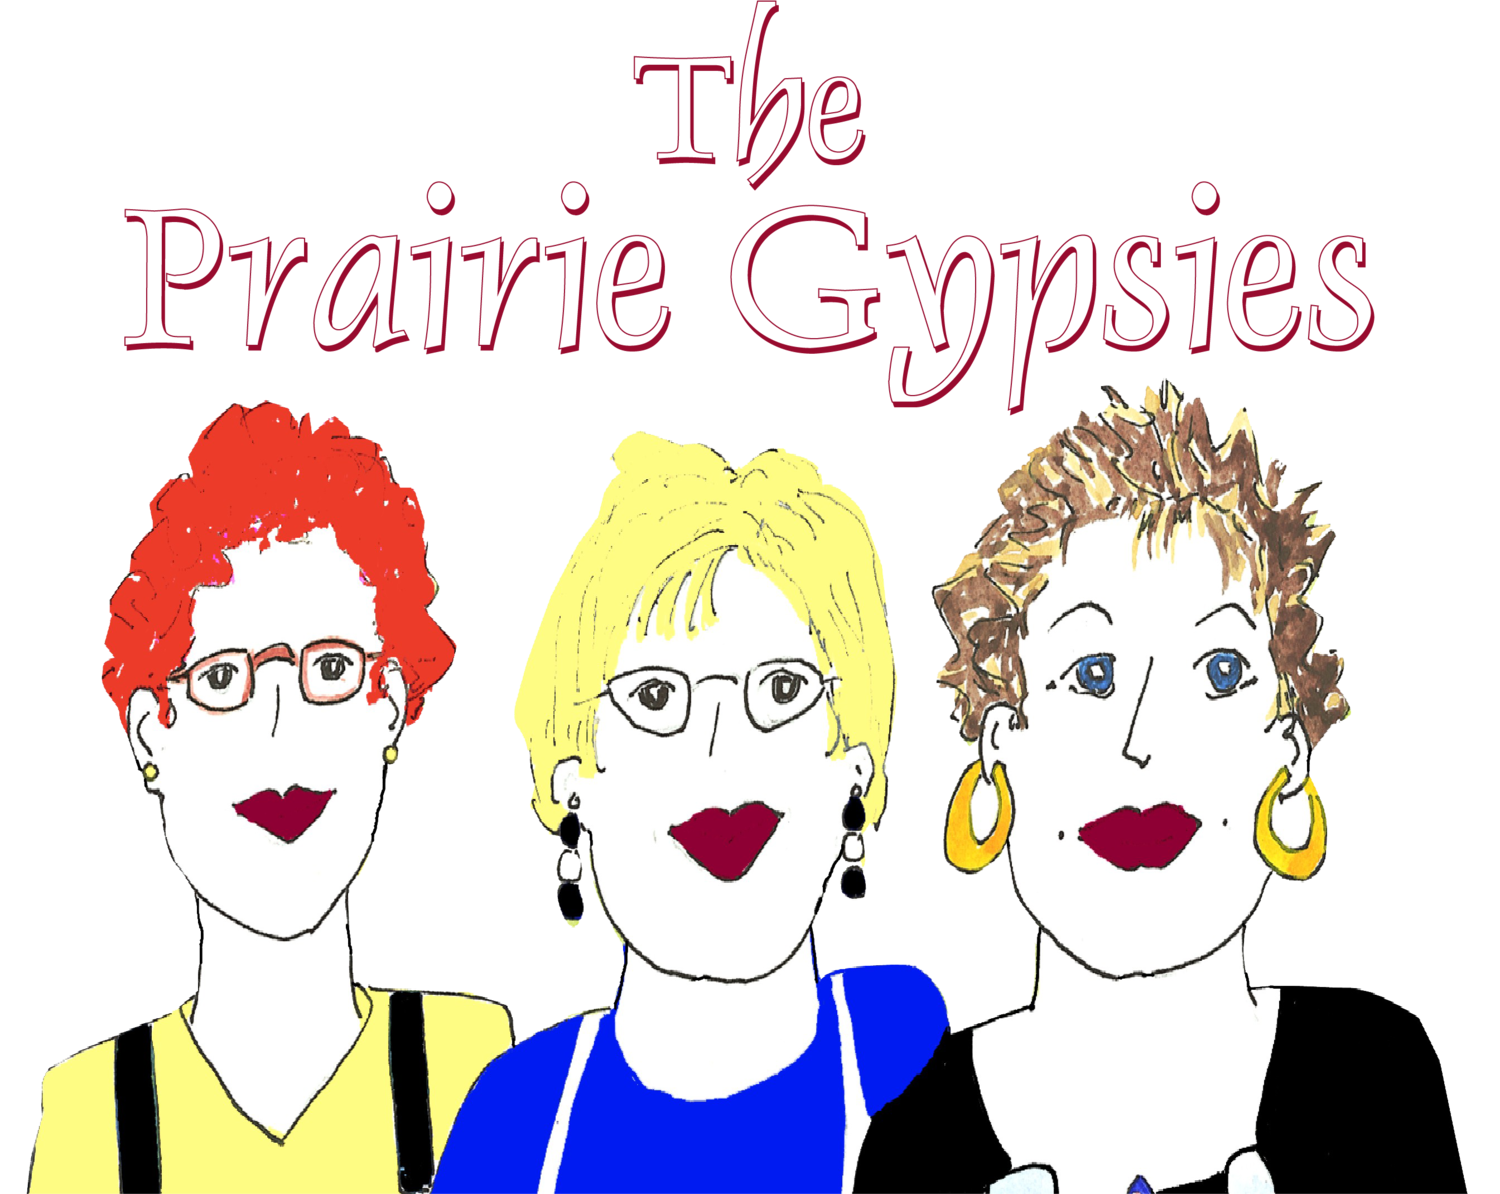 The Prairie Gypsies